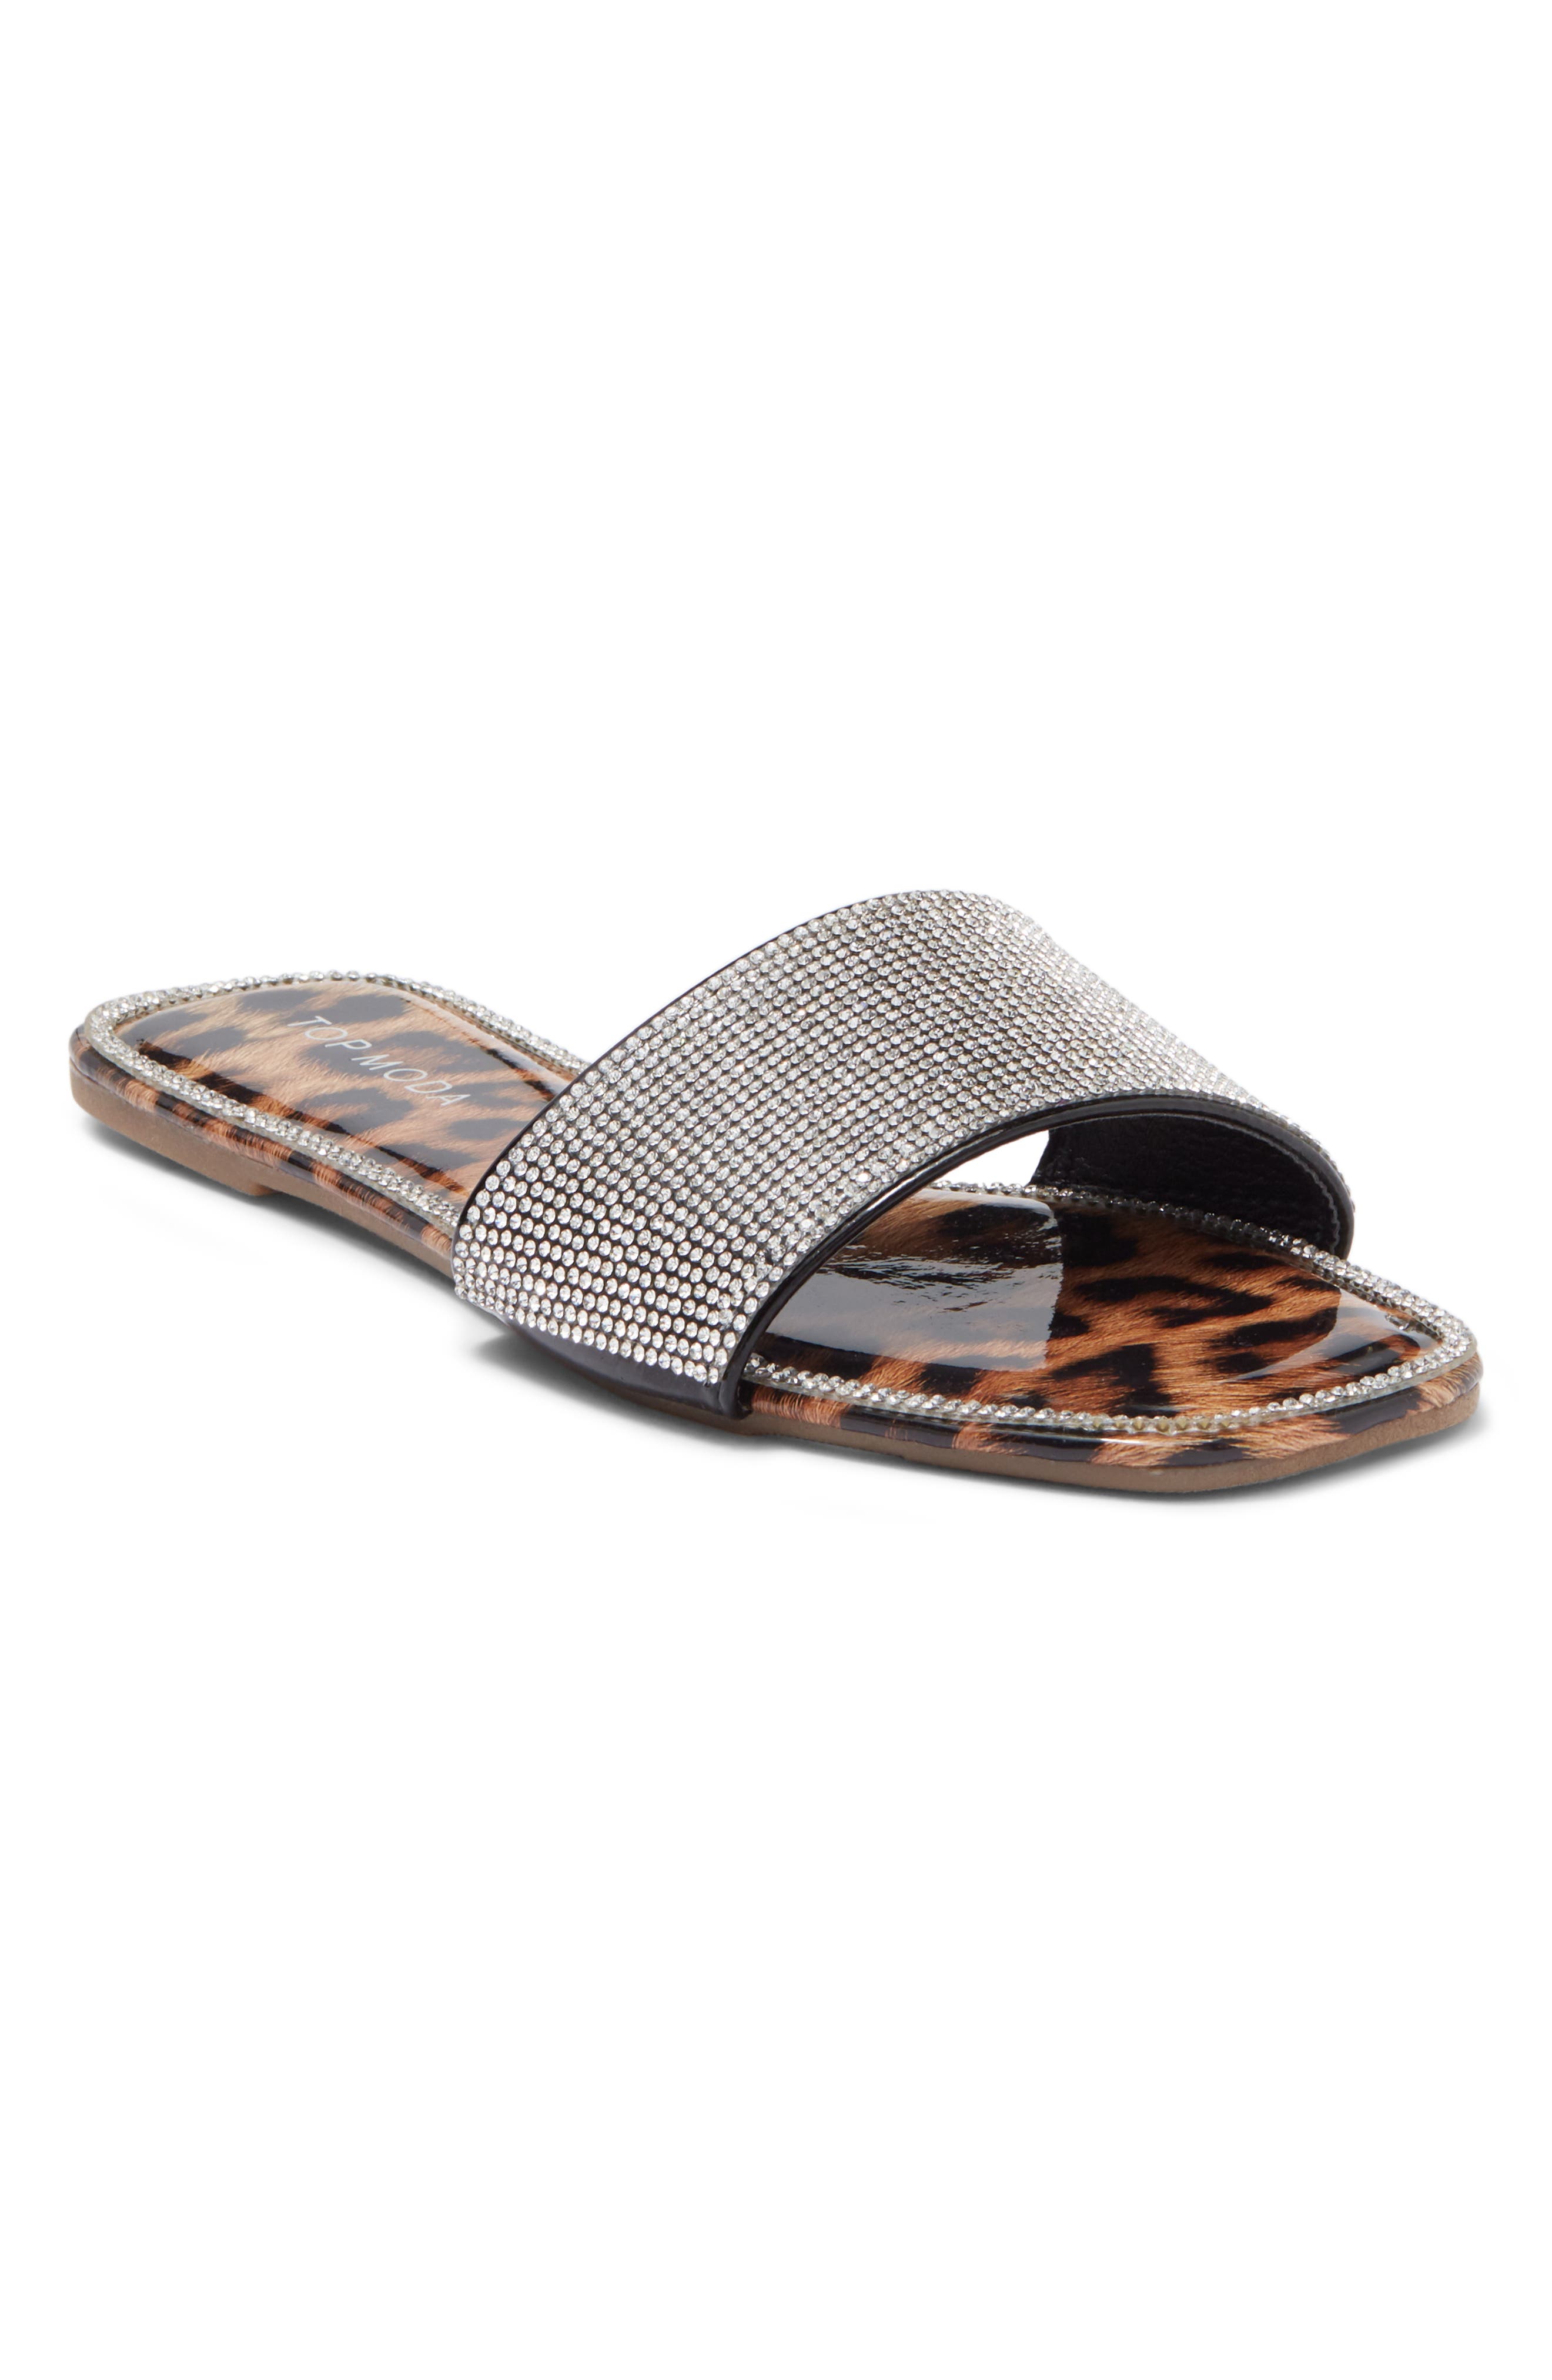 Top Moda Rhinestone Embellished Sandal In Leopard